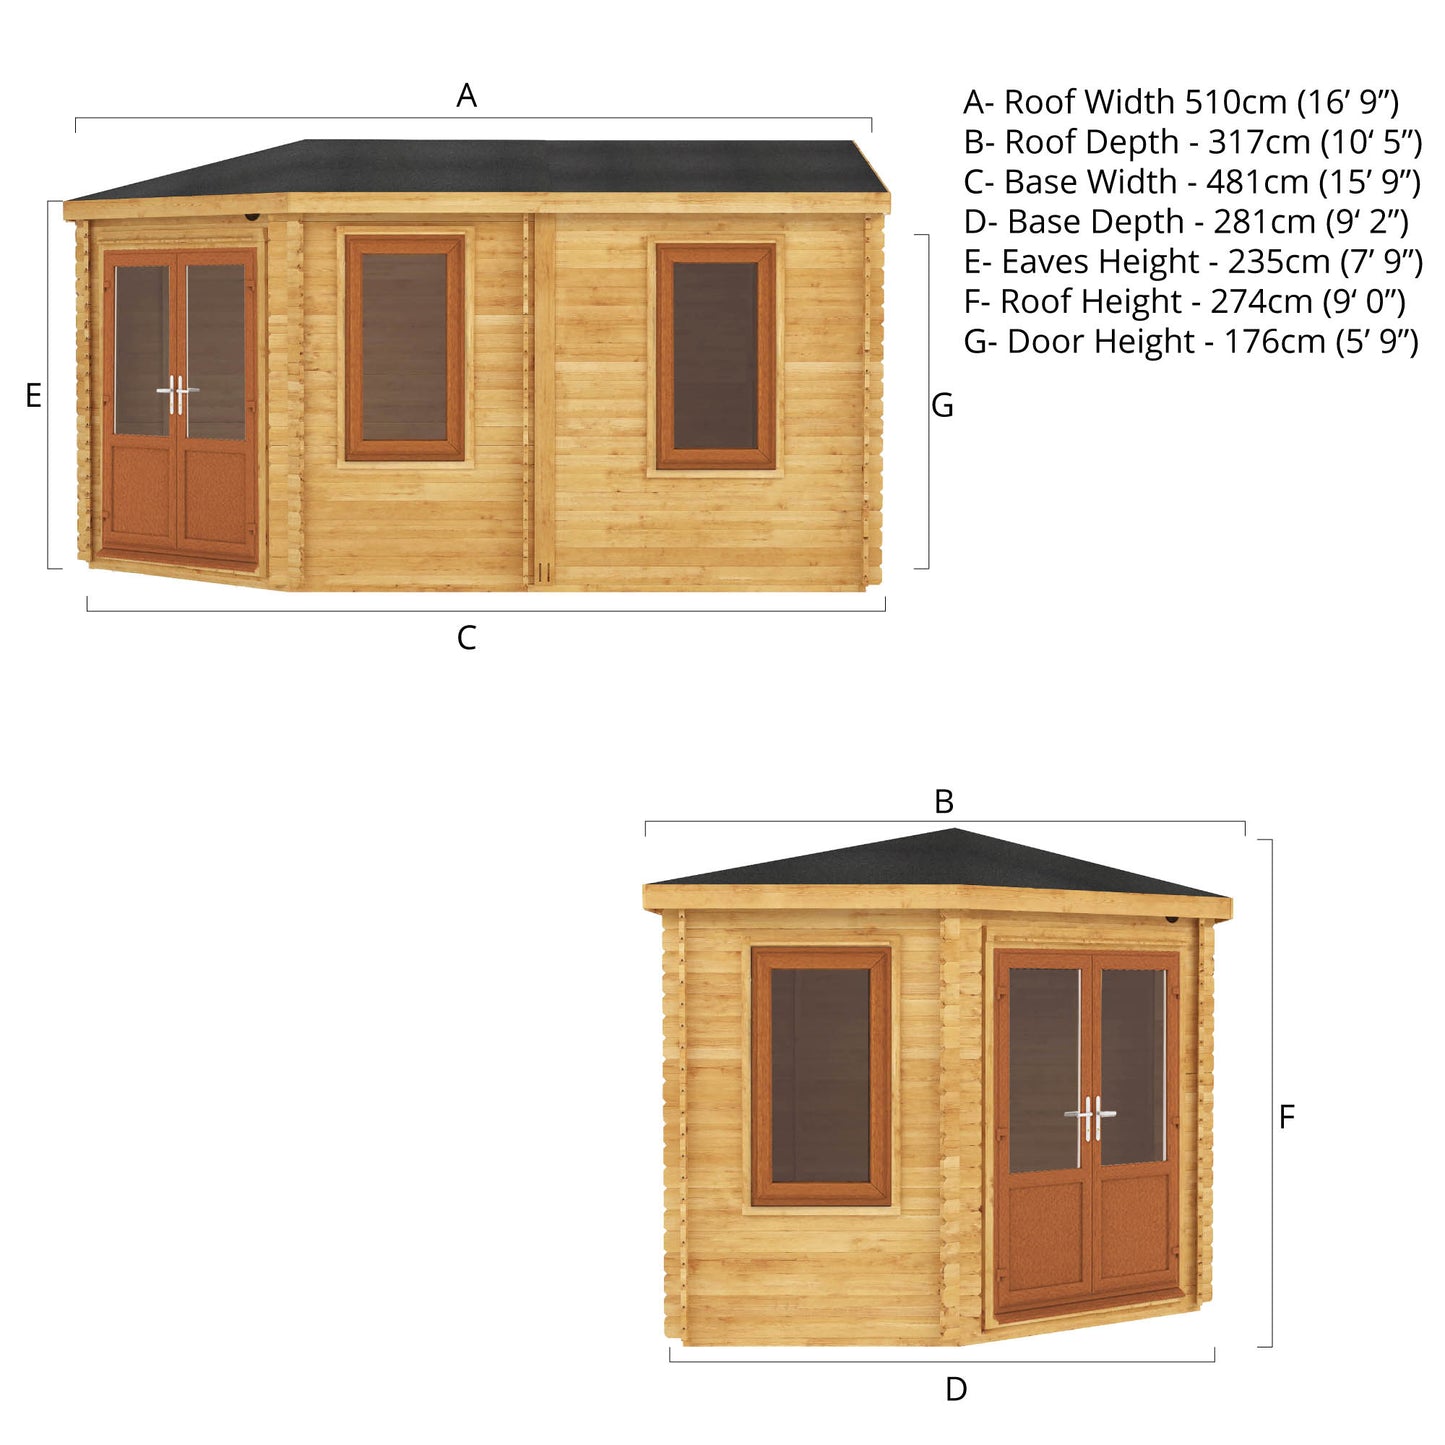 The Goldcrest 5m x 3m Log Cabin with Oak UPVC